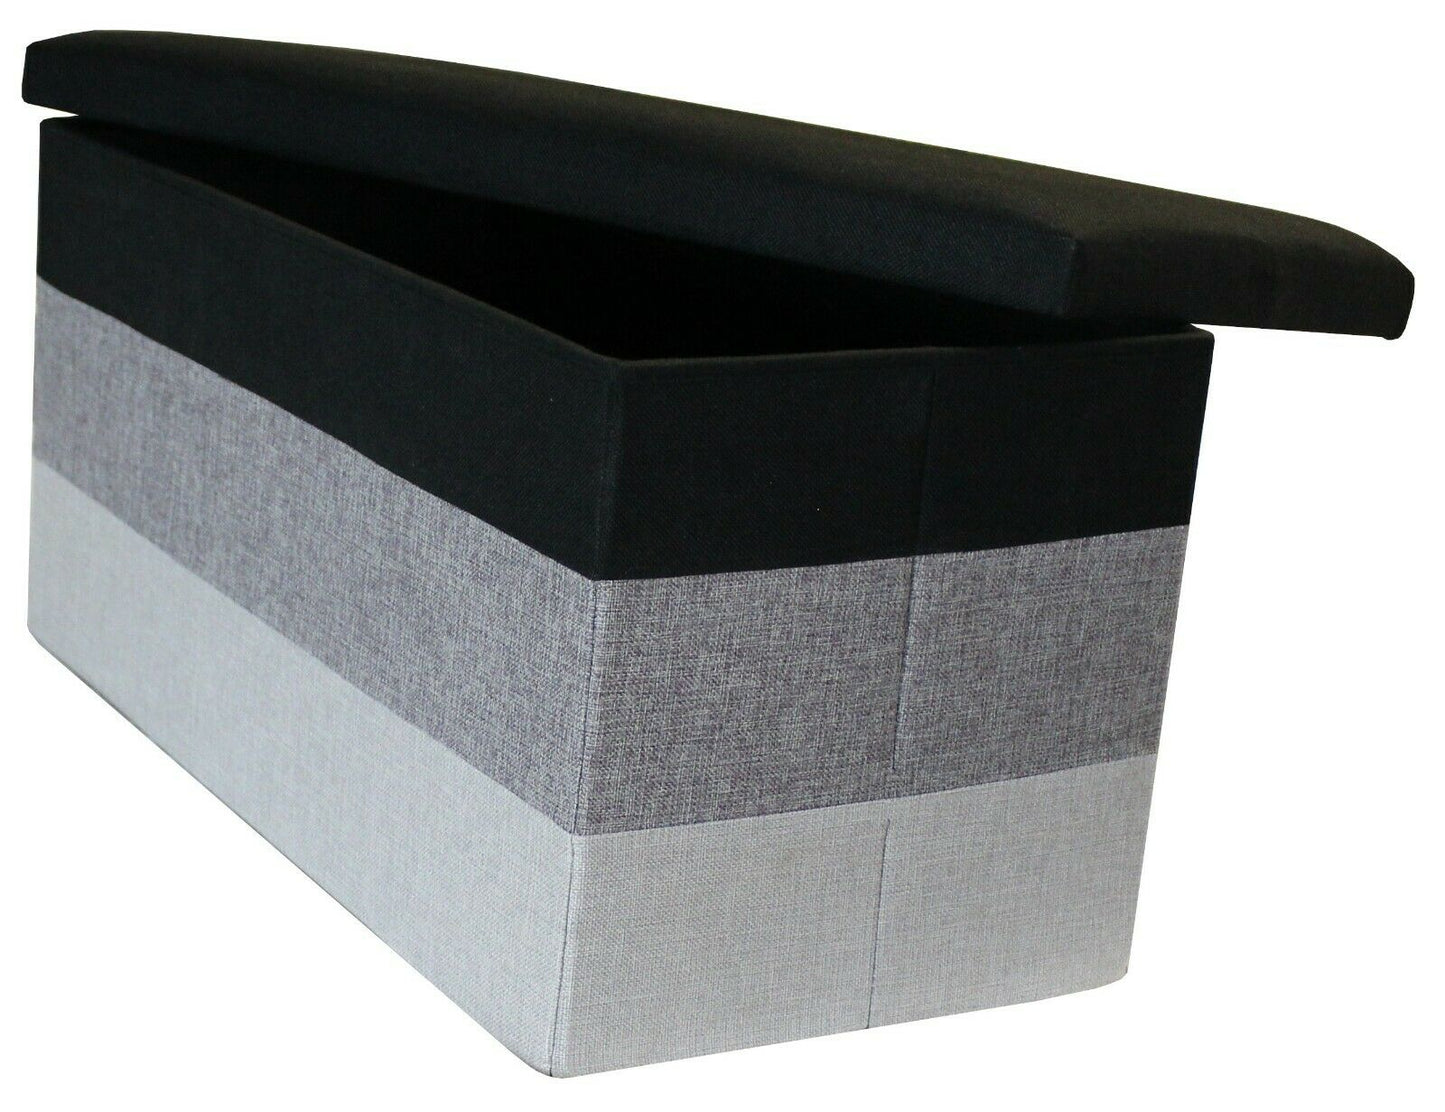 Large Linear Storage Ottoman Black Grey Three Tone Foot Stool Seat Storage Box